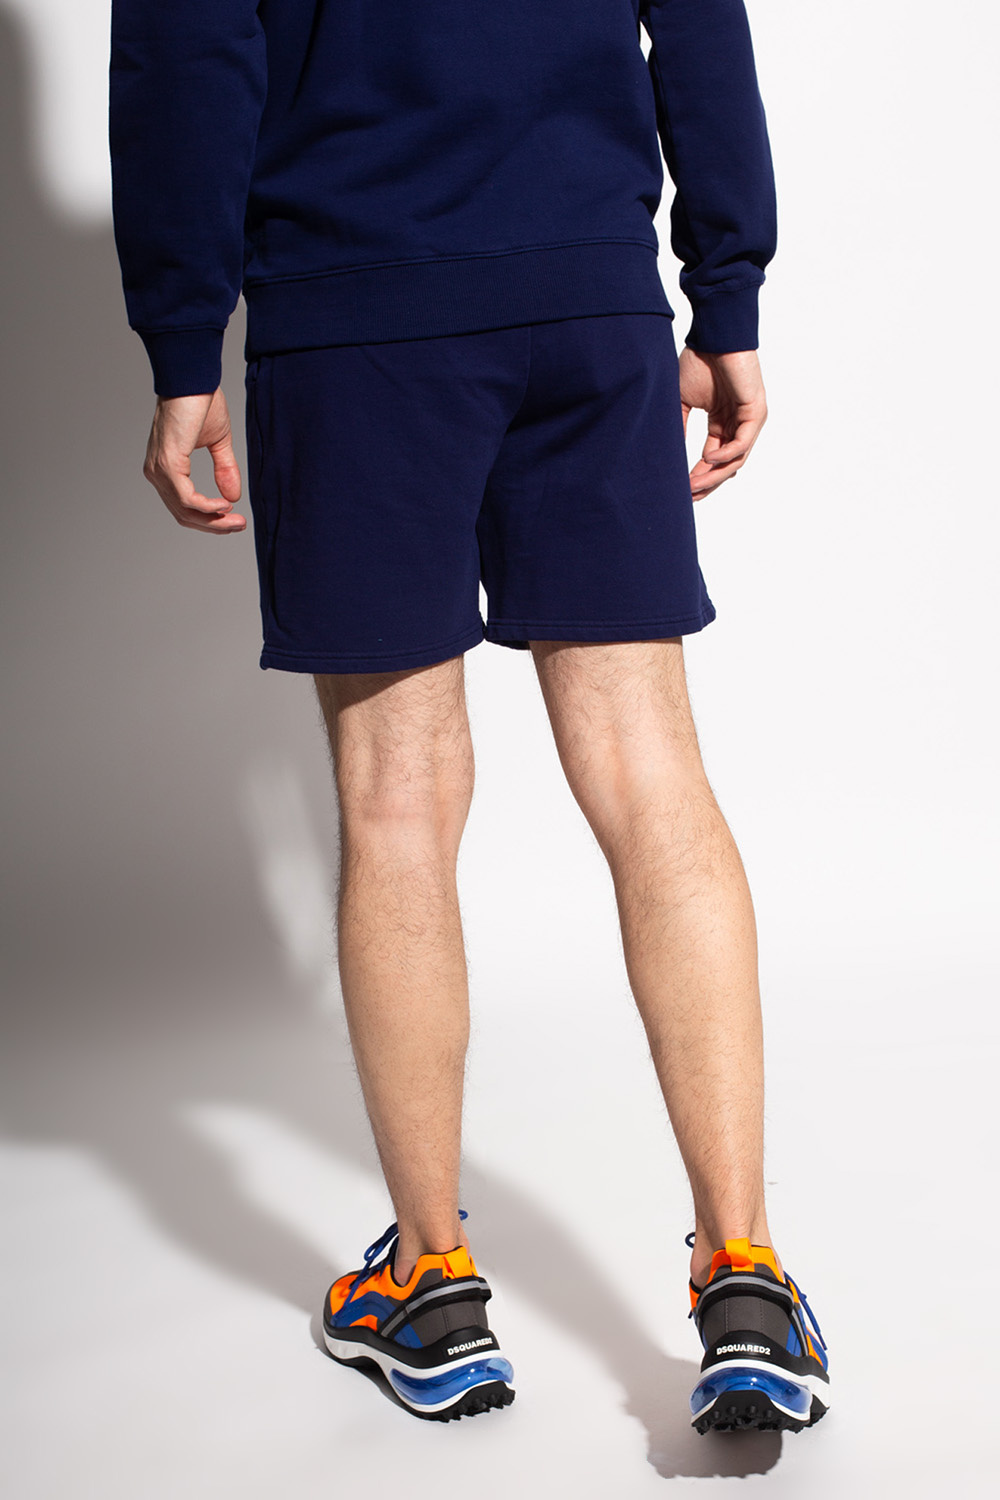 Nike Sportswear Woven Pants Leggings con diseño fruncido en la parte trasera de ASOS 4505